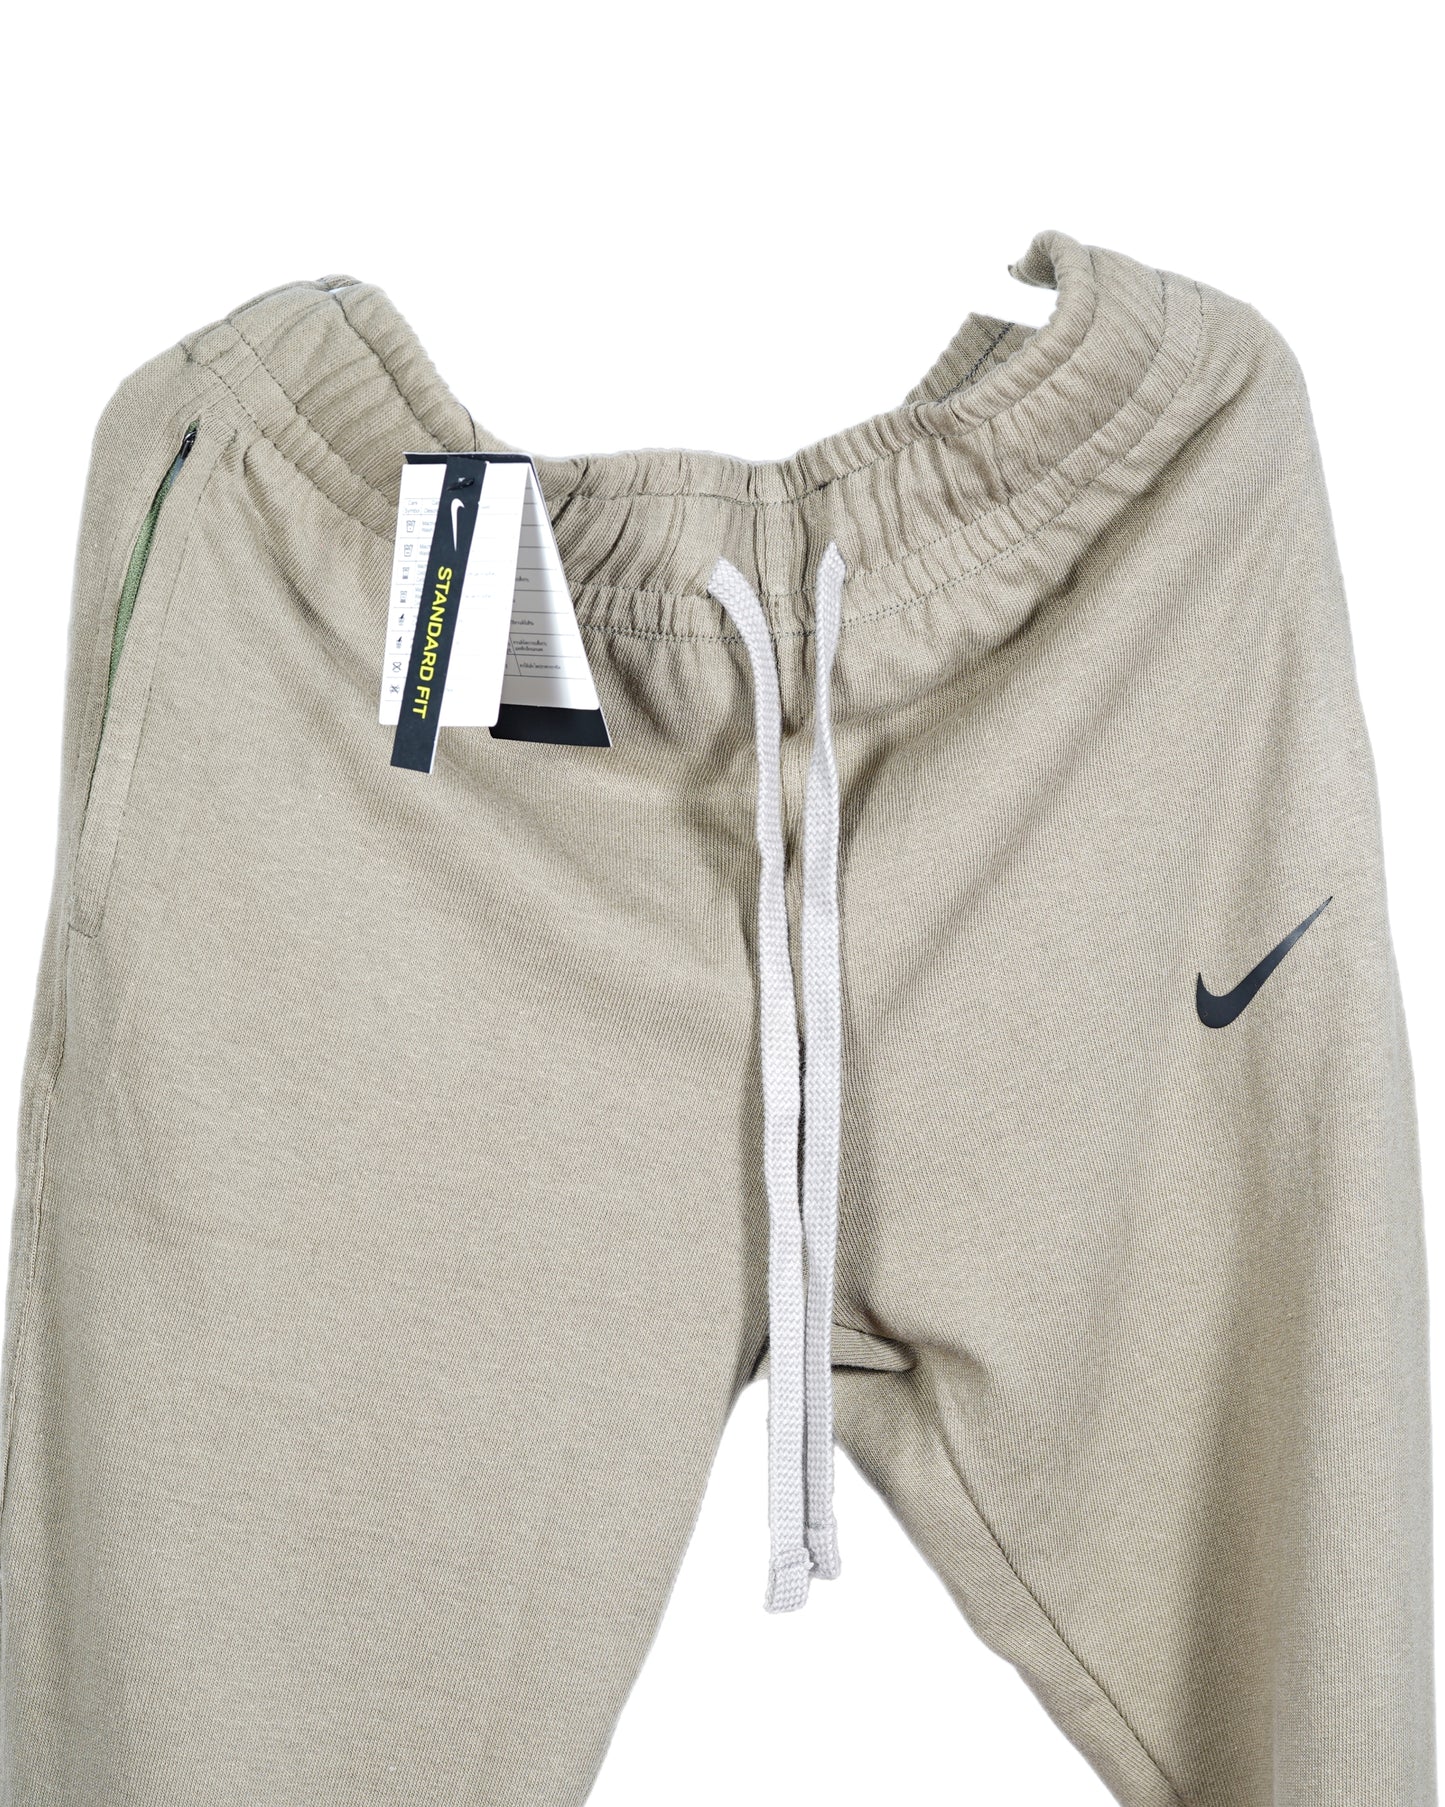 Nike STANDARD FIT PANT -Beige